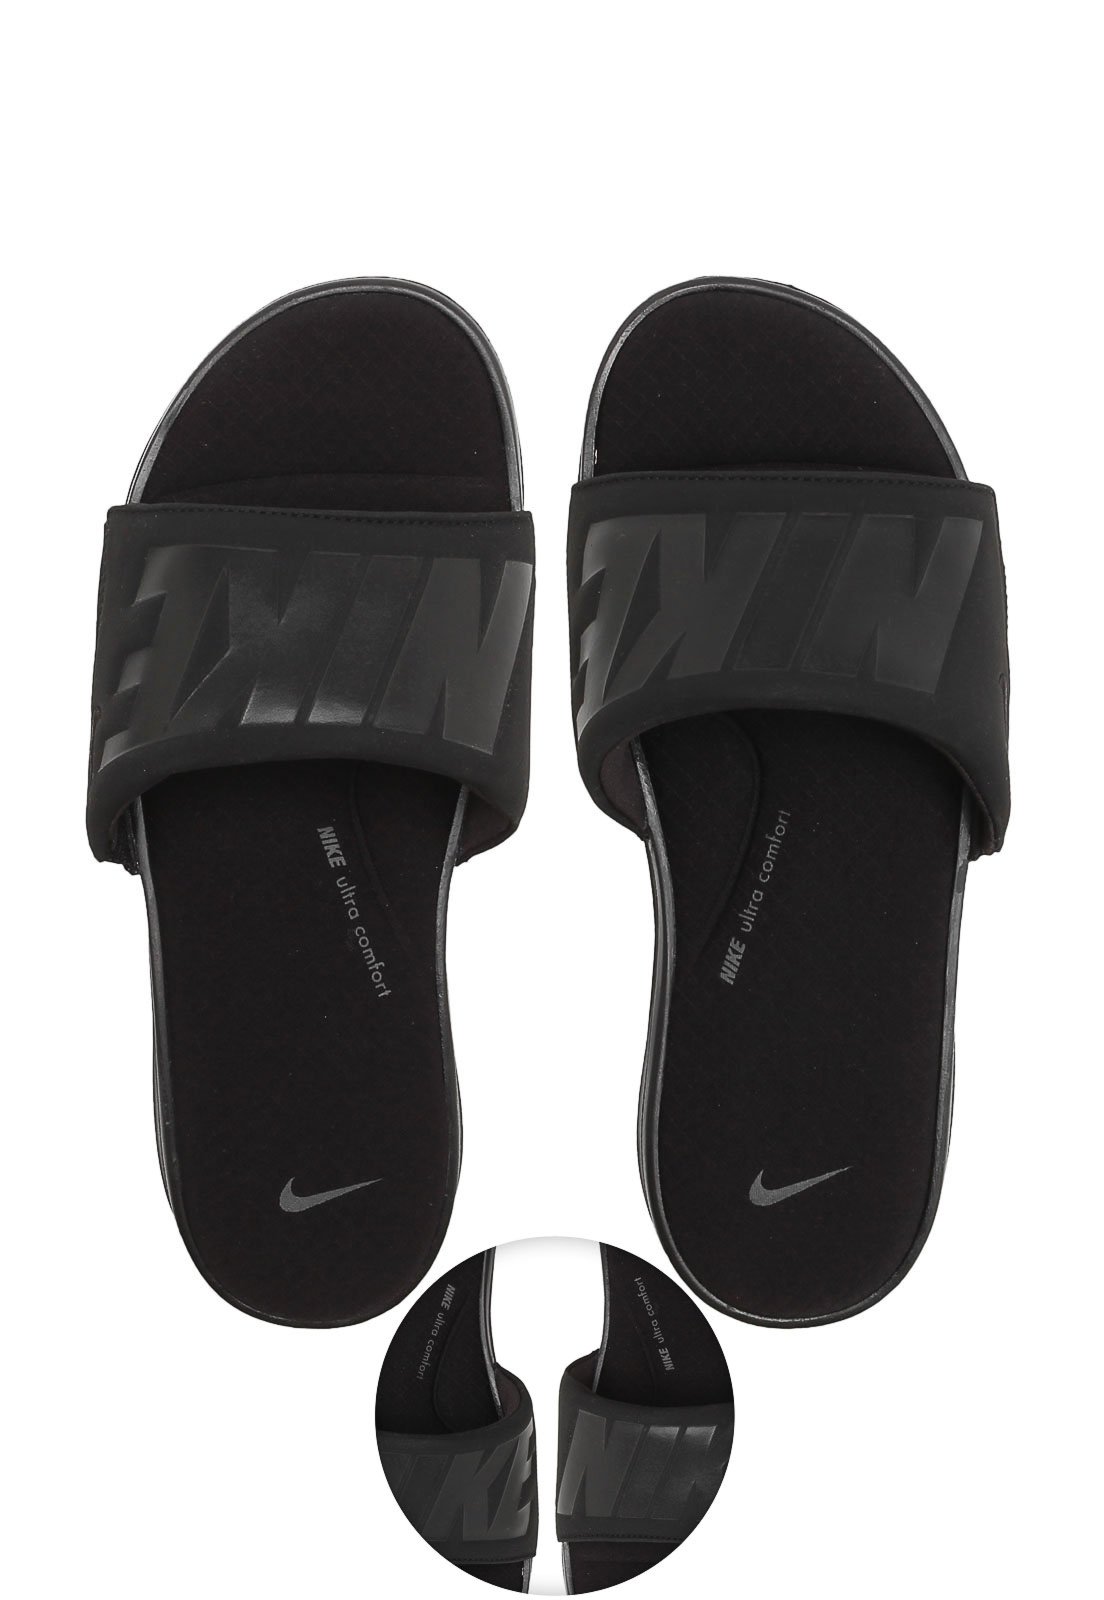 https://static.dafiti.com.br/p/Nike-Sportswear-Chinelo-Slide-Nike-Sportswear-Ultra-Comfort-3-Preto-2359-1667964-1-zoom.jpg